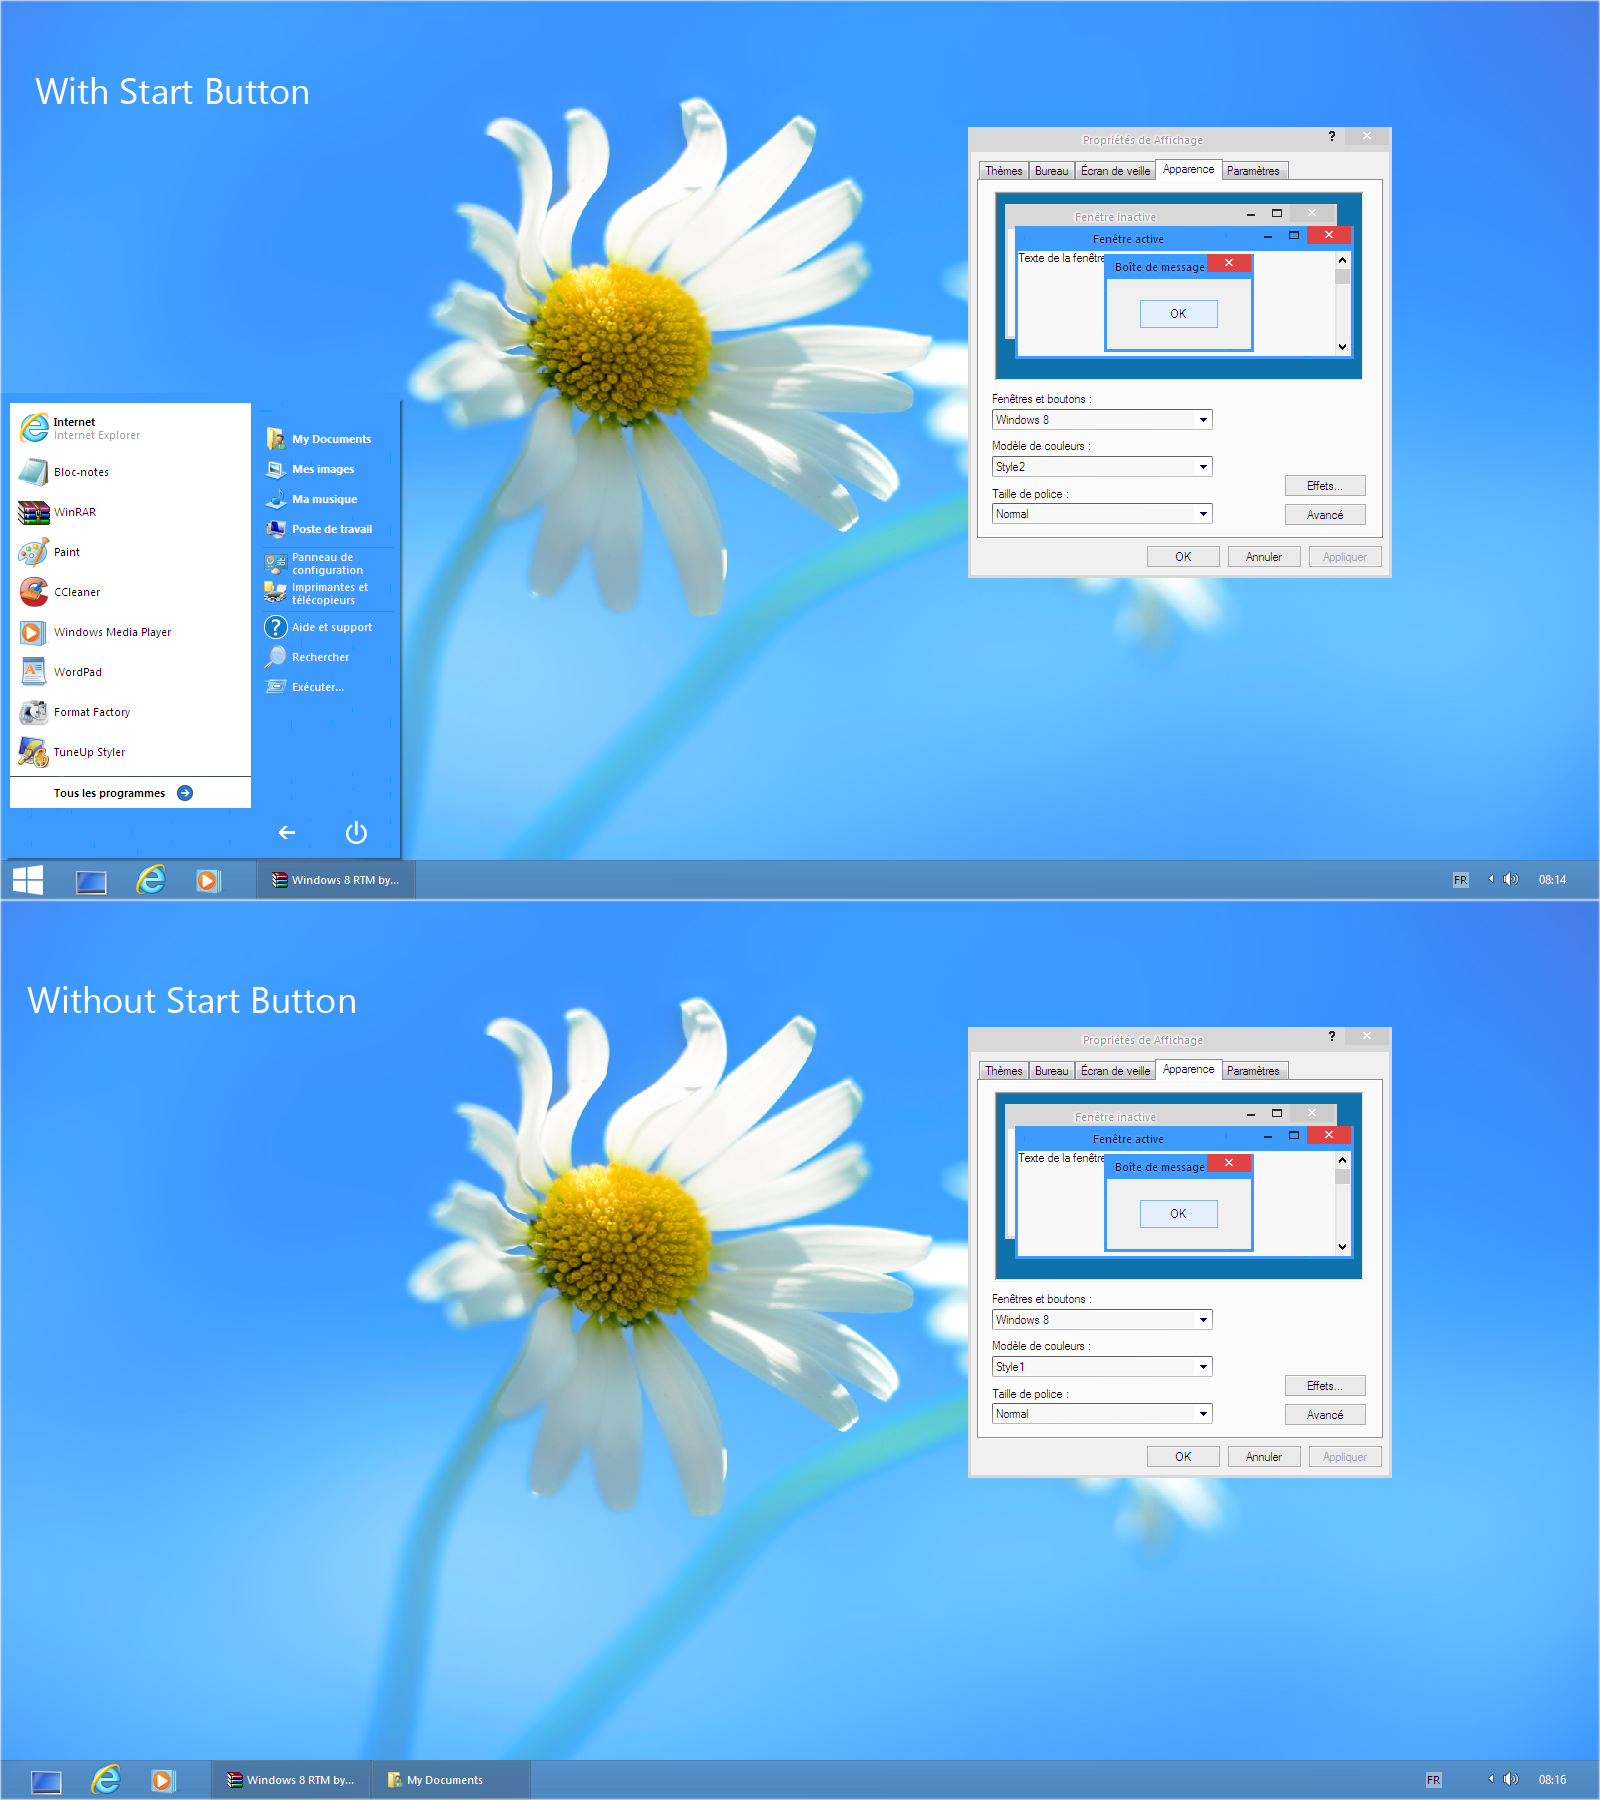 Roronoa Zoro Theme Windows XP by Danrockster on DeviantArt